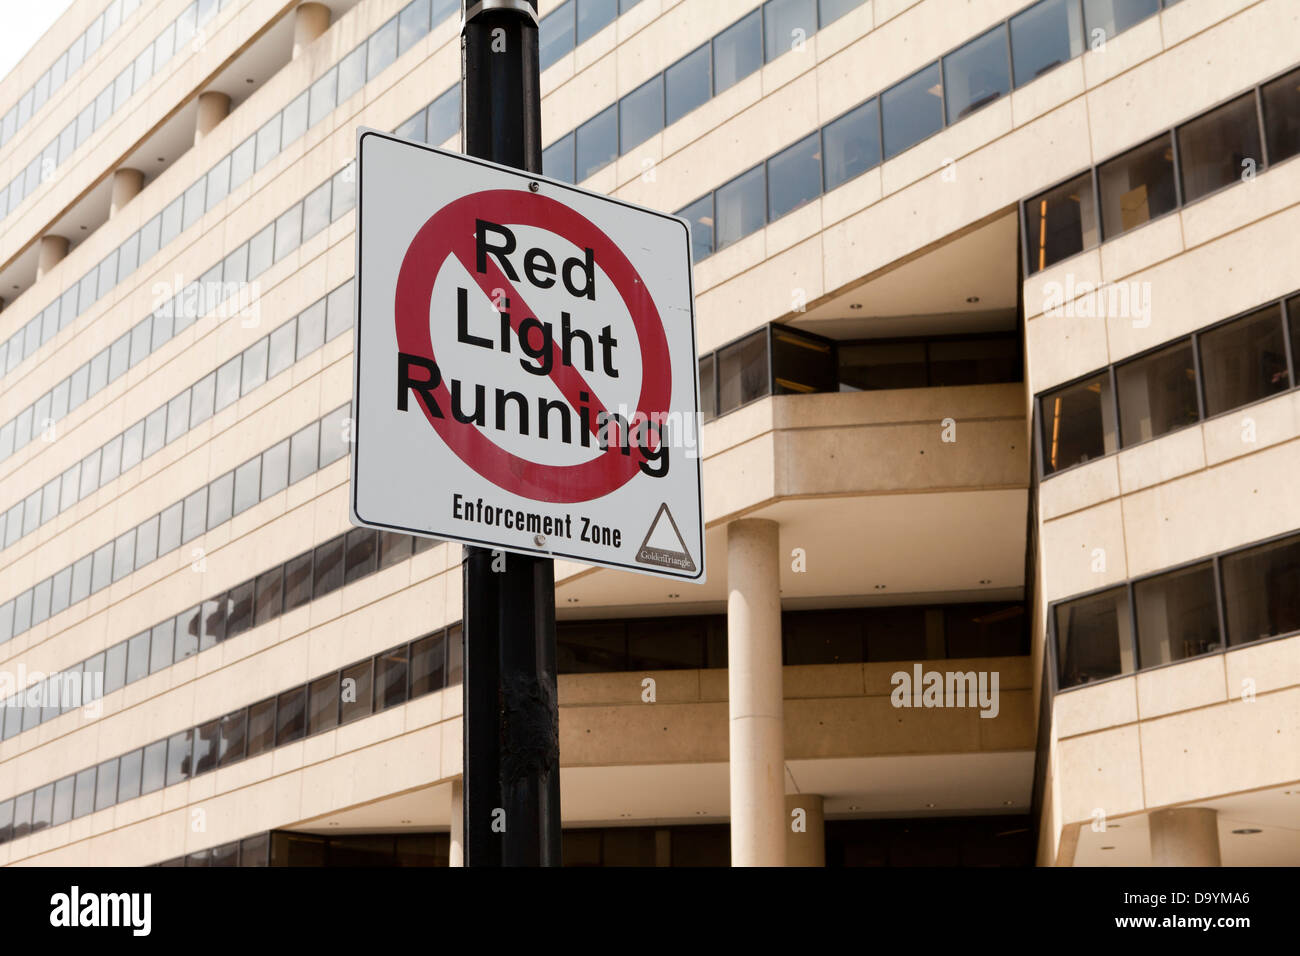 No red light running traffic sign Stock Photo